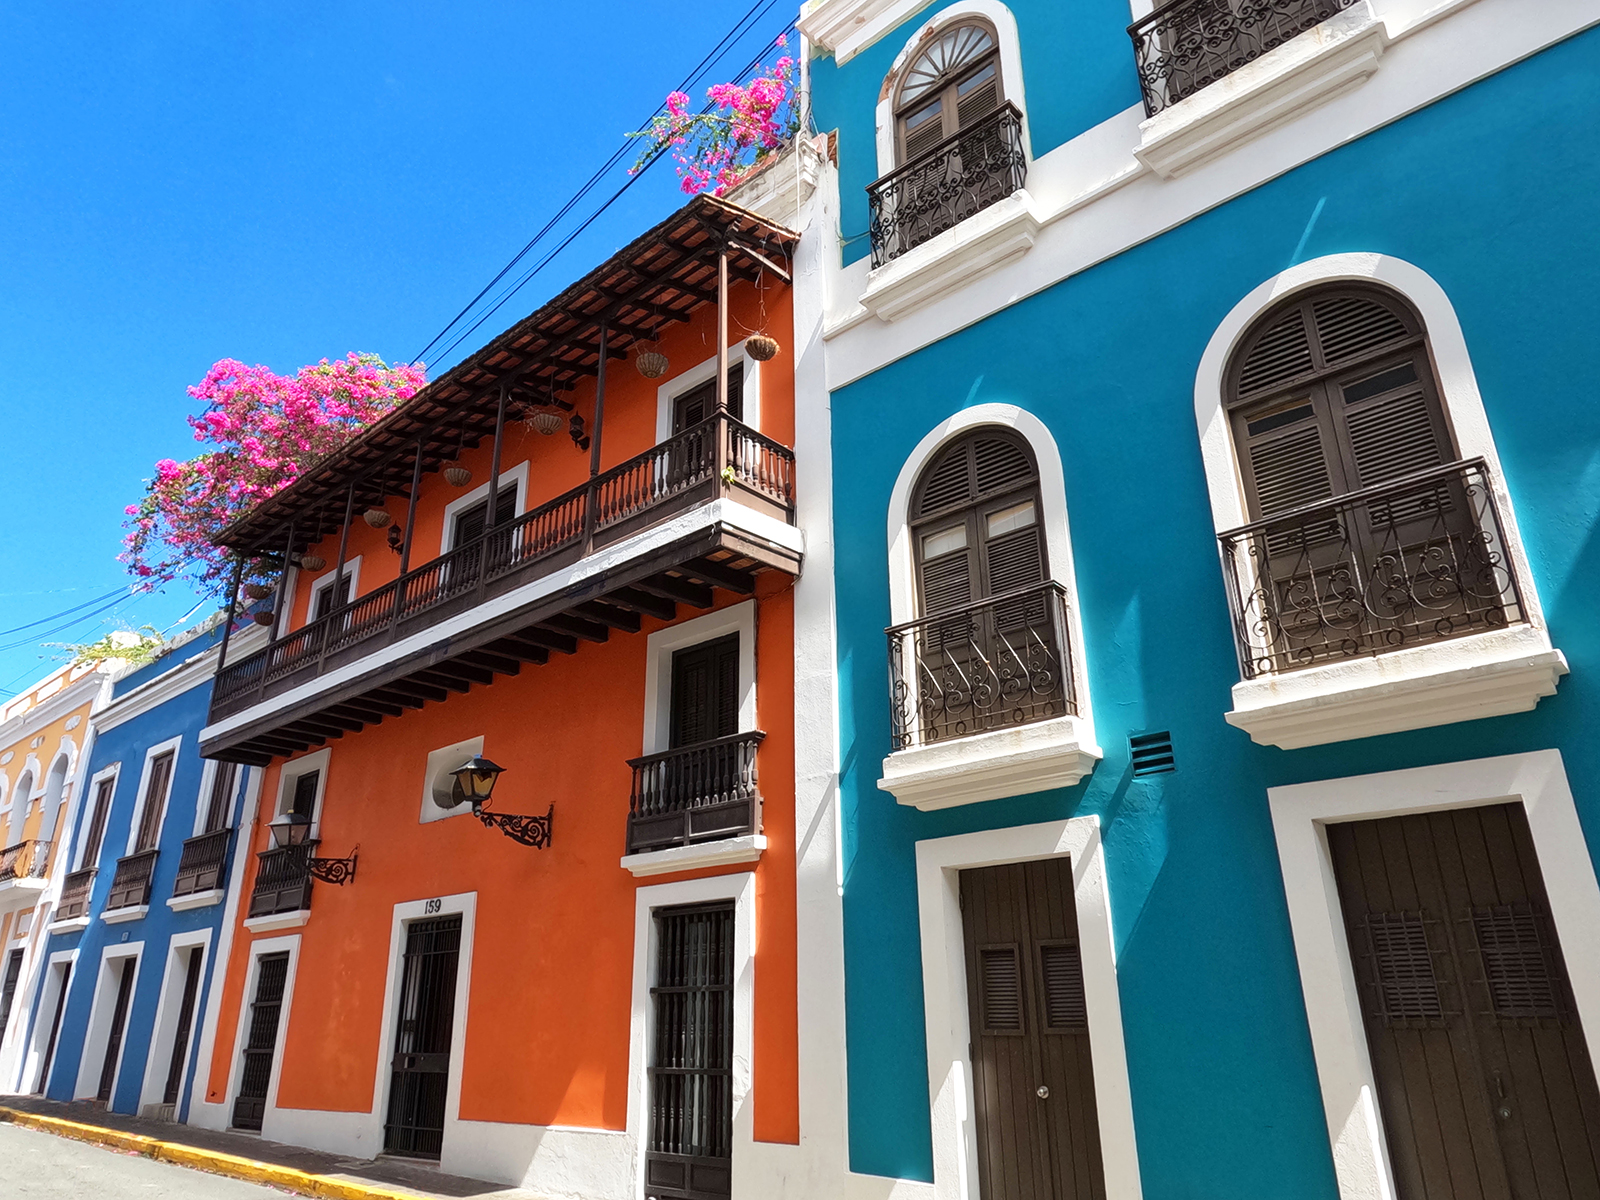 Visiting La Perla Neighborhood in Old San Juan